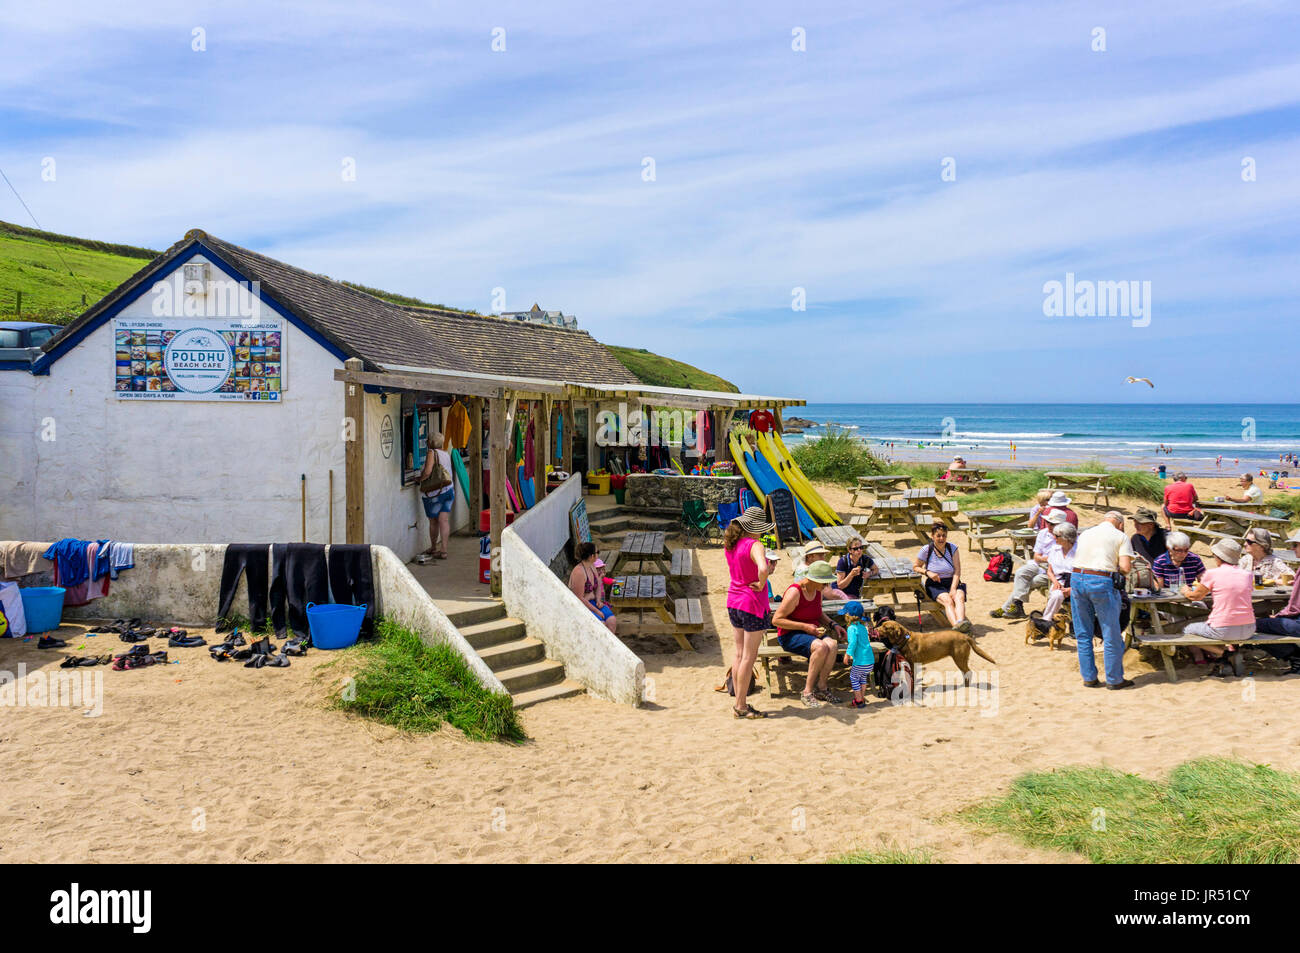 Beach cafe at Poldhu Cove beach, Cornwall, UK on the Lizard Peninsula Stock Photo